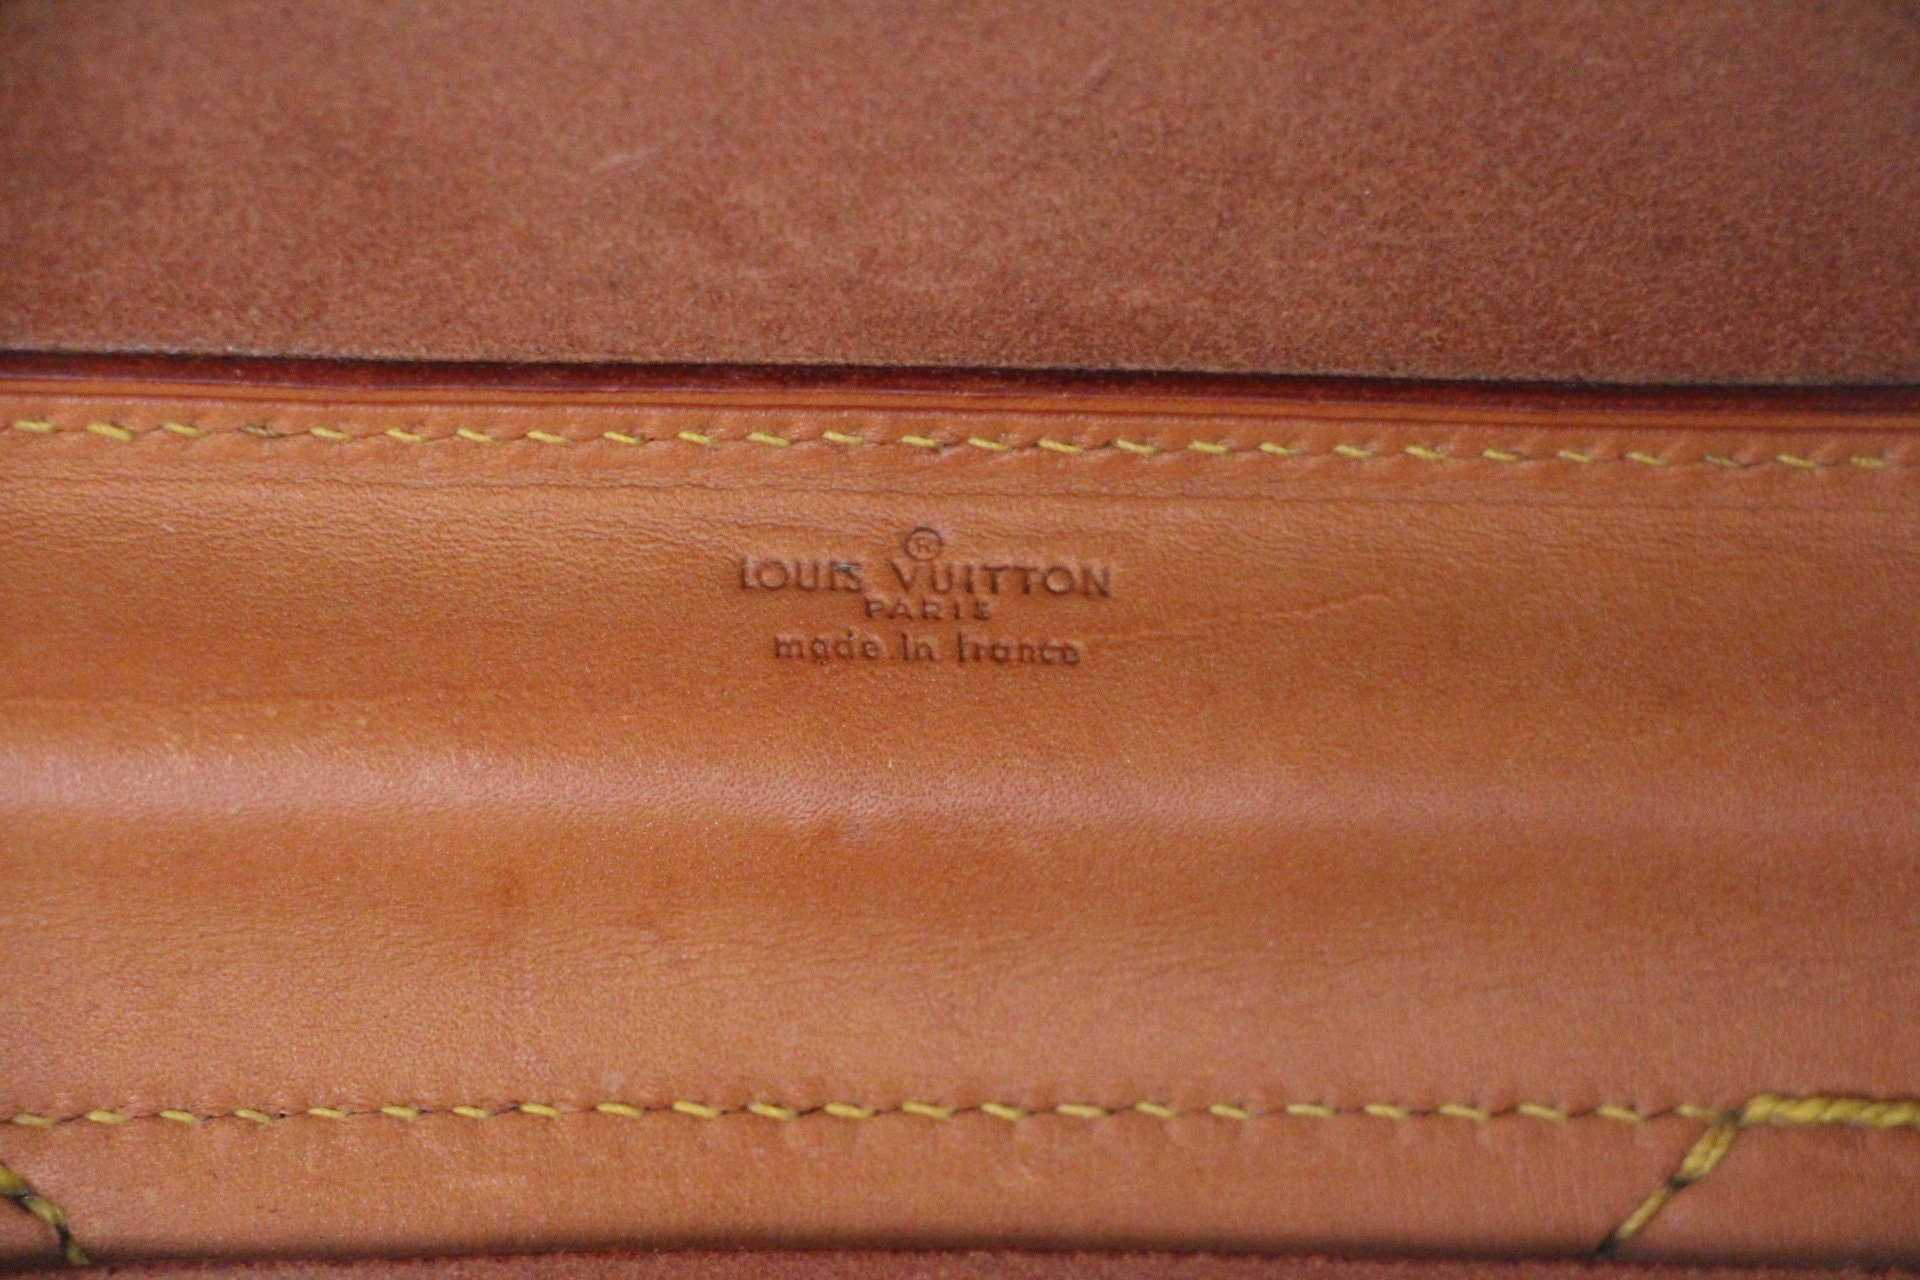 AUTH LOUIS VUITTON Monogram STEAMER Bag Order 45 TRAVEL LUGGAGE